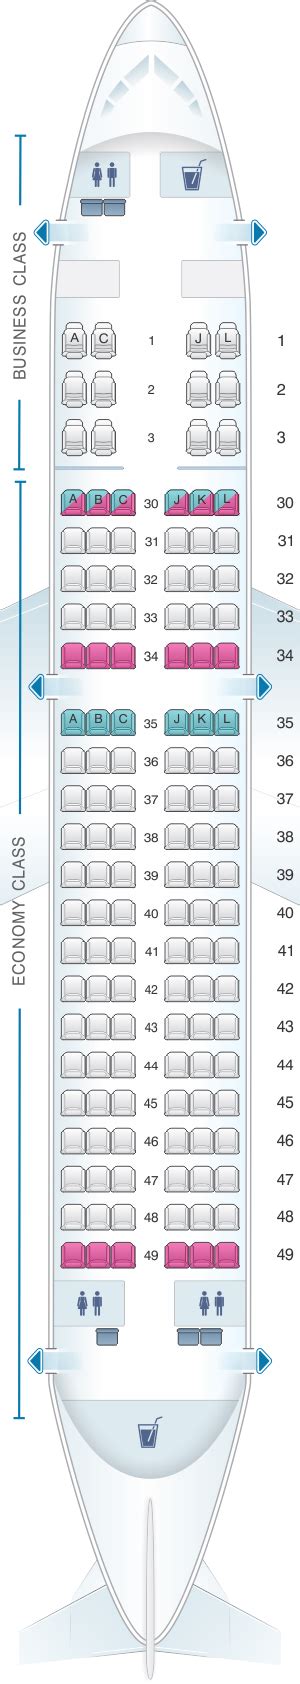 Seat Map Saudi Arabian Airlines Airbus A320 200 Standard Configuration